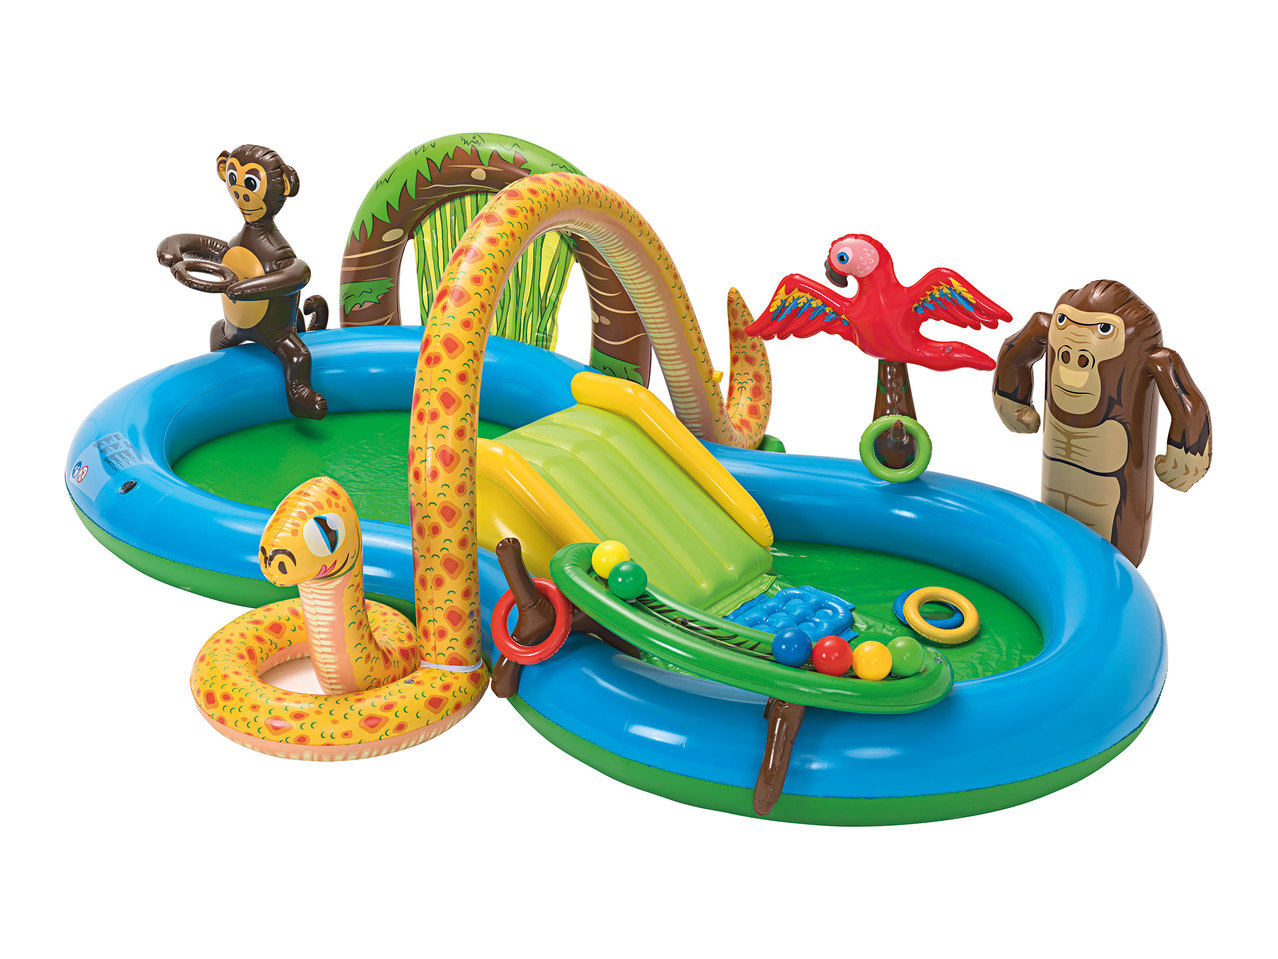 Playtive Junior Kids' Adventure Paddling Pool1